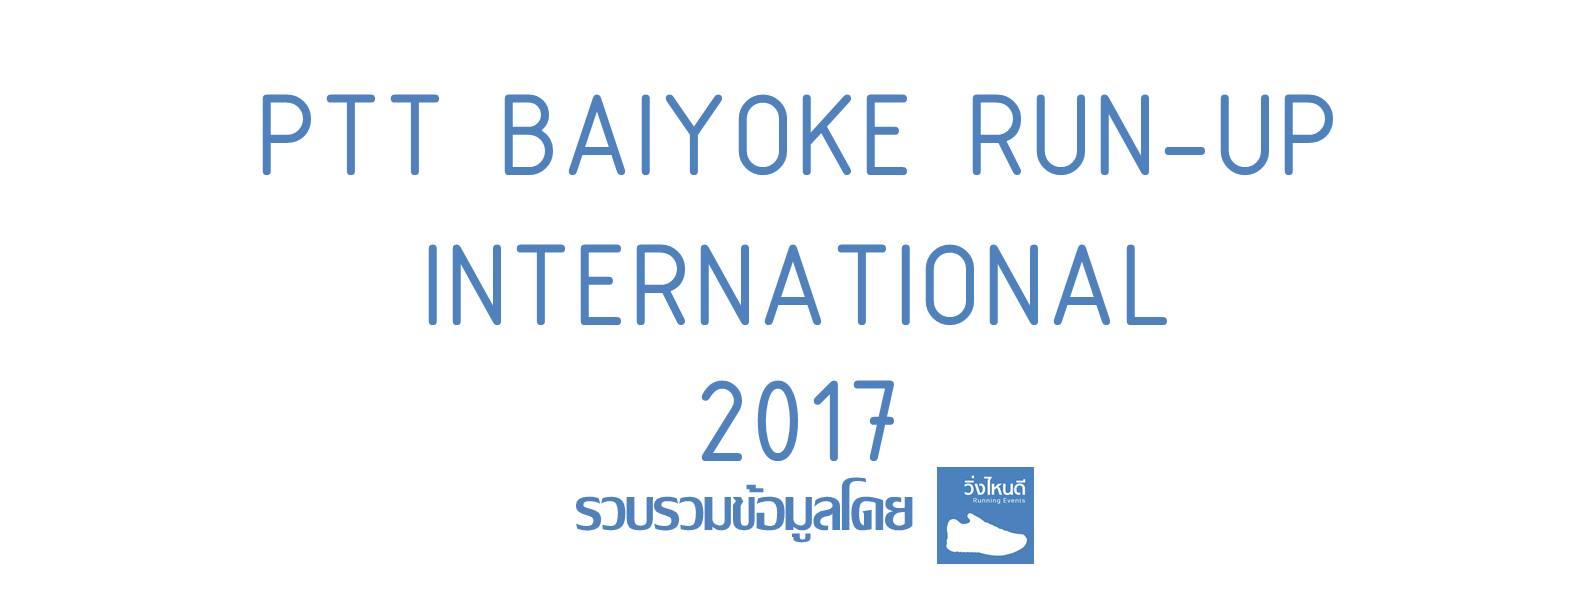 PTT Baiyoke Run-Up International 2017